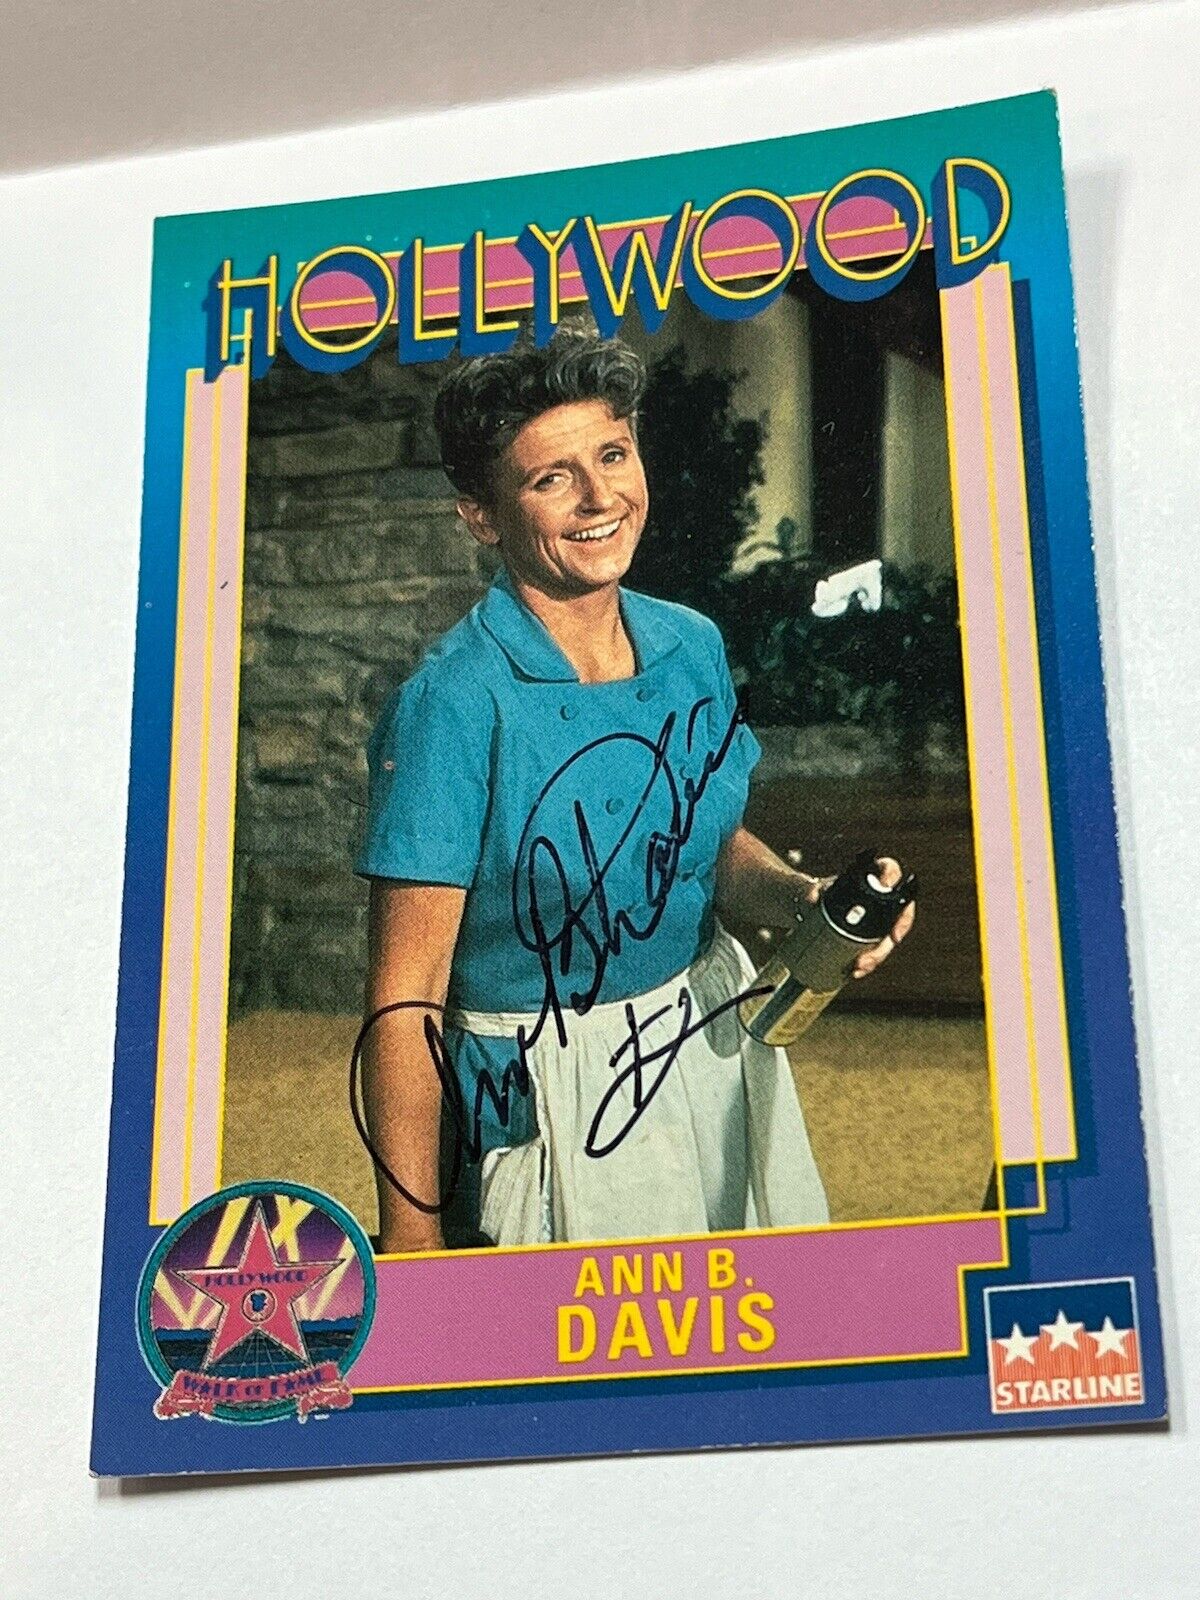 1991 #103 ANN B. DAVIS HOLLYWOOD STARLINE SIGNED WALK OF FAME CARD